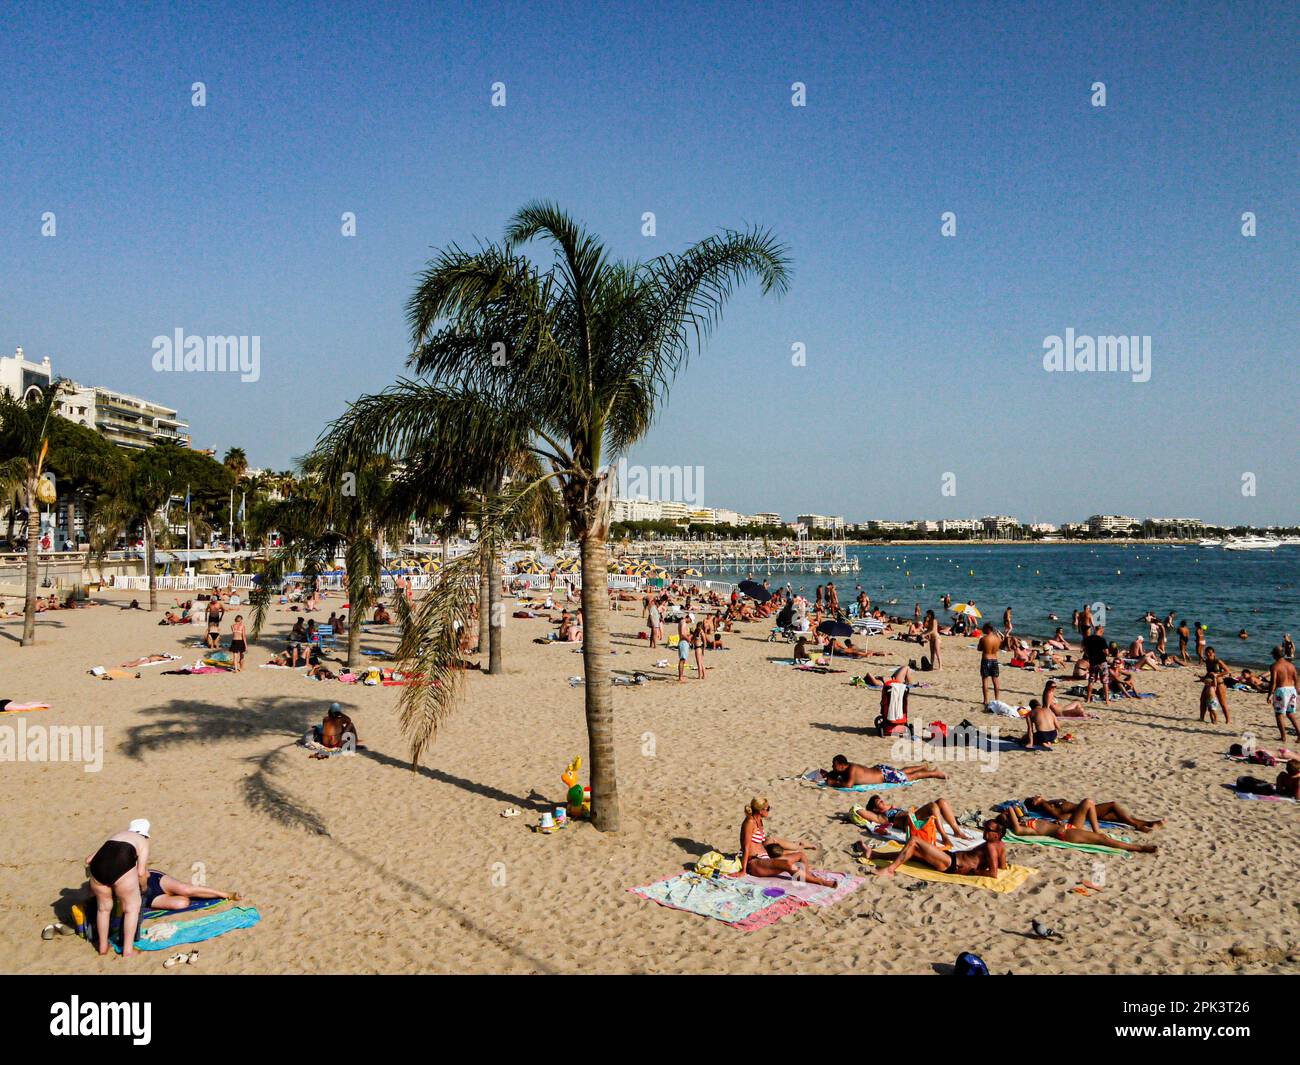 Cannes beach people sunbathing Stock Photo